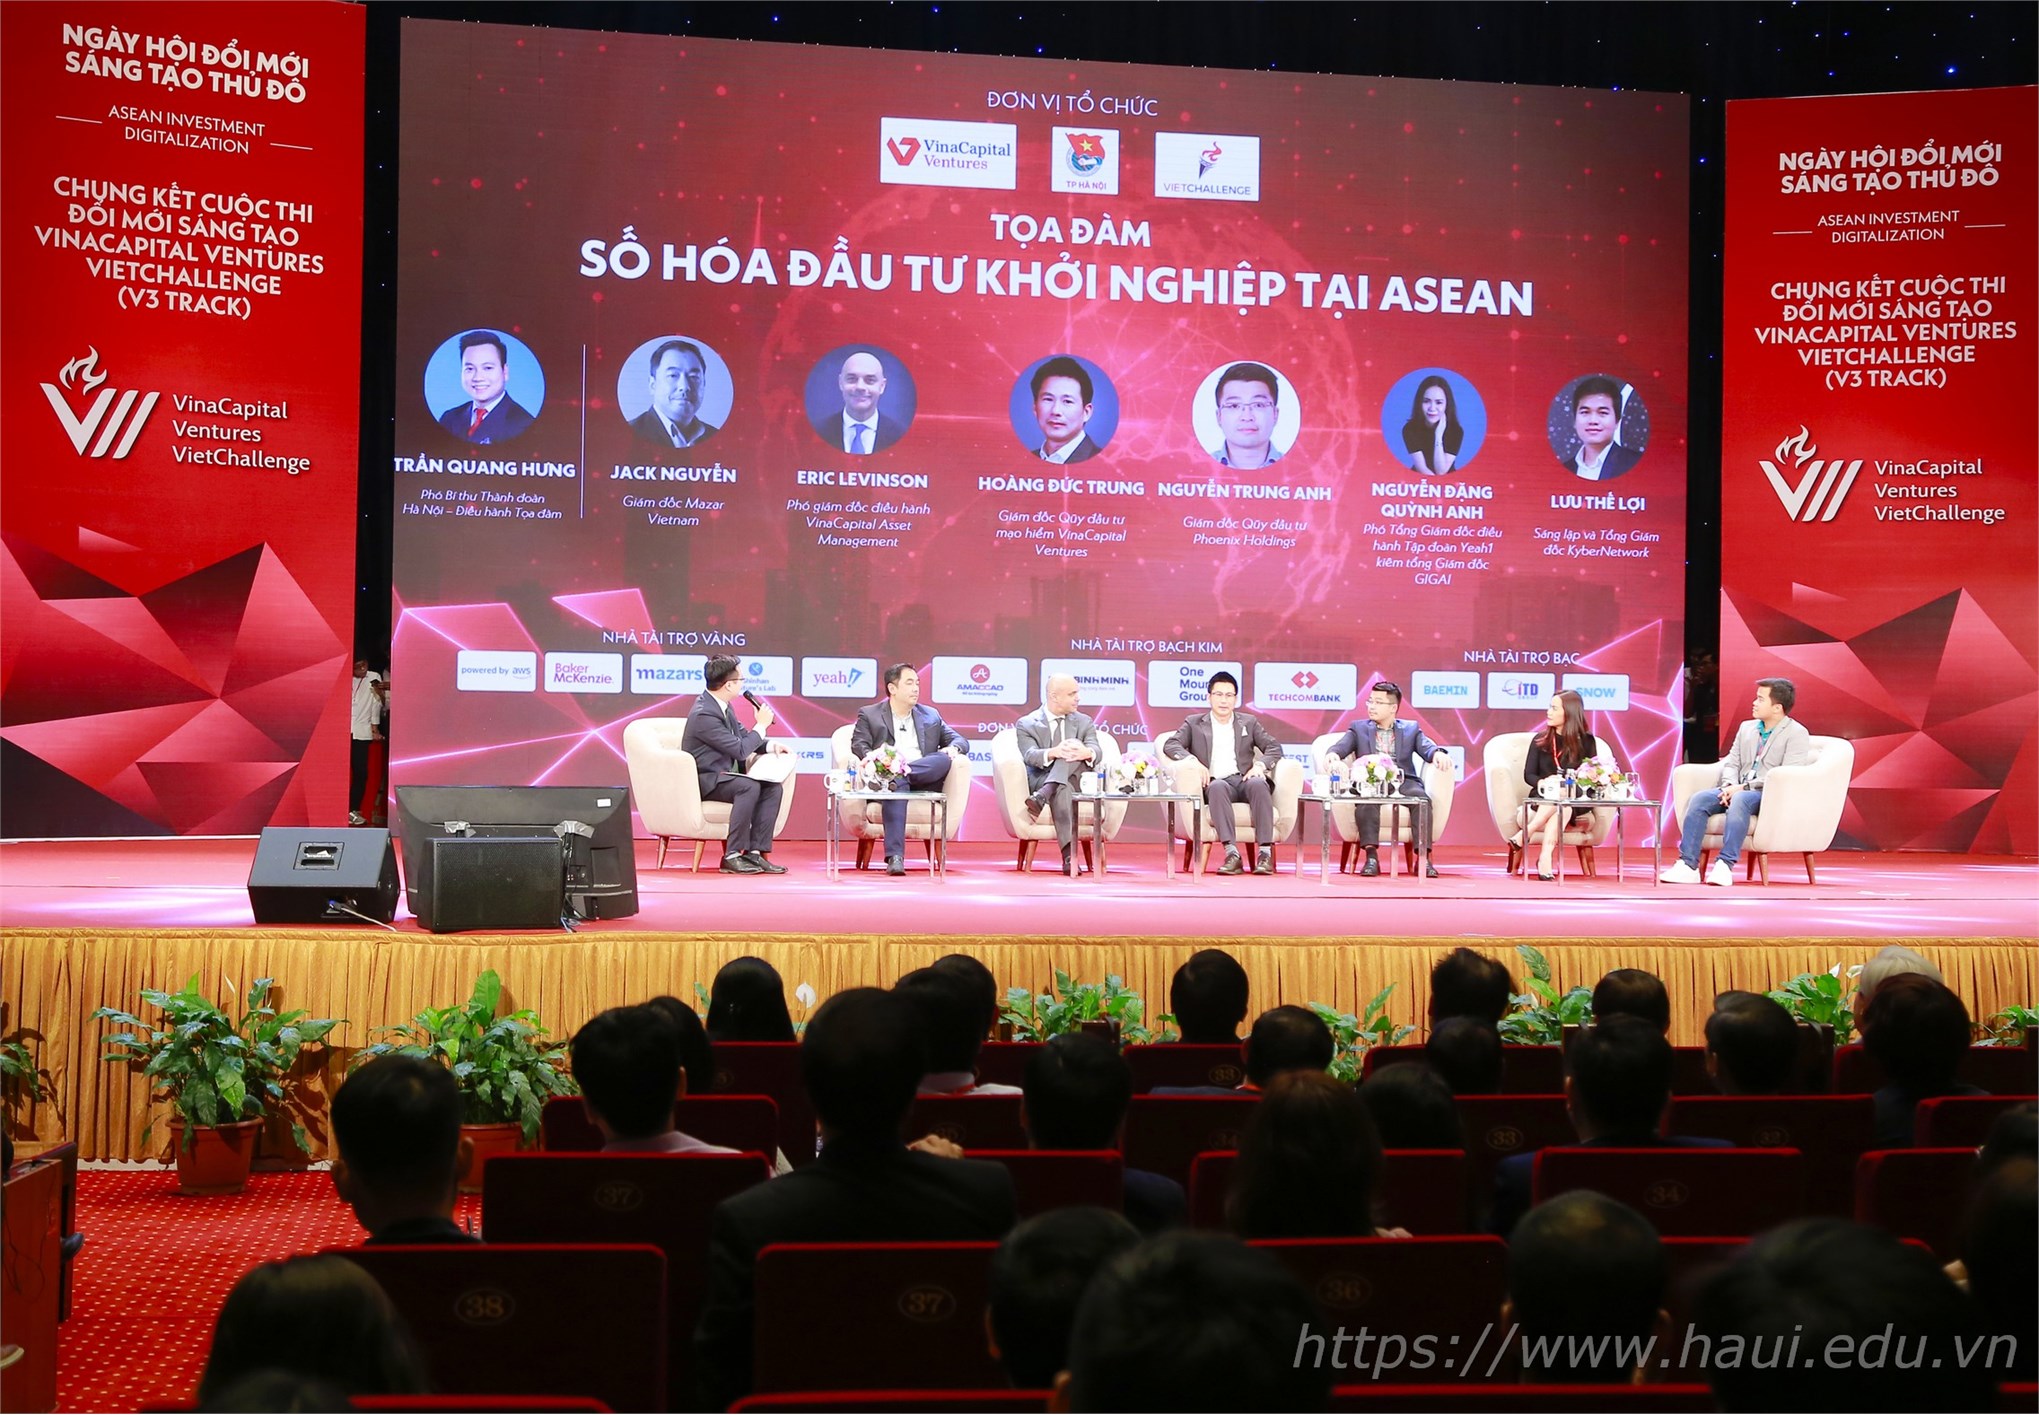 Hanoi University of Industry joins the Capital Ventures Network